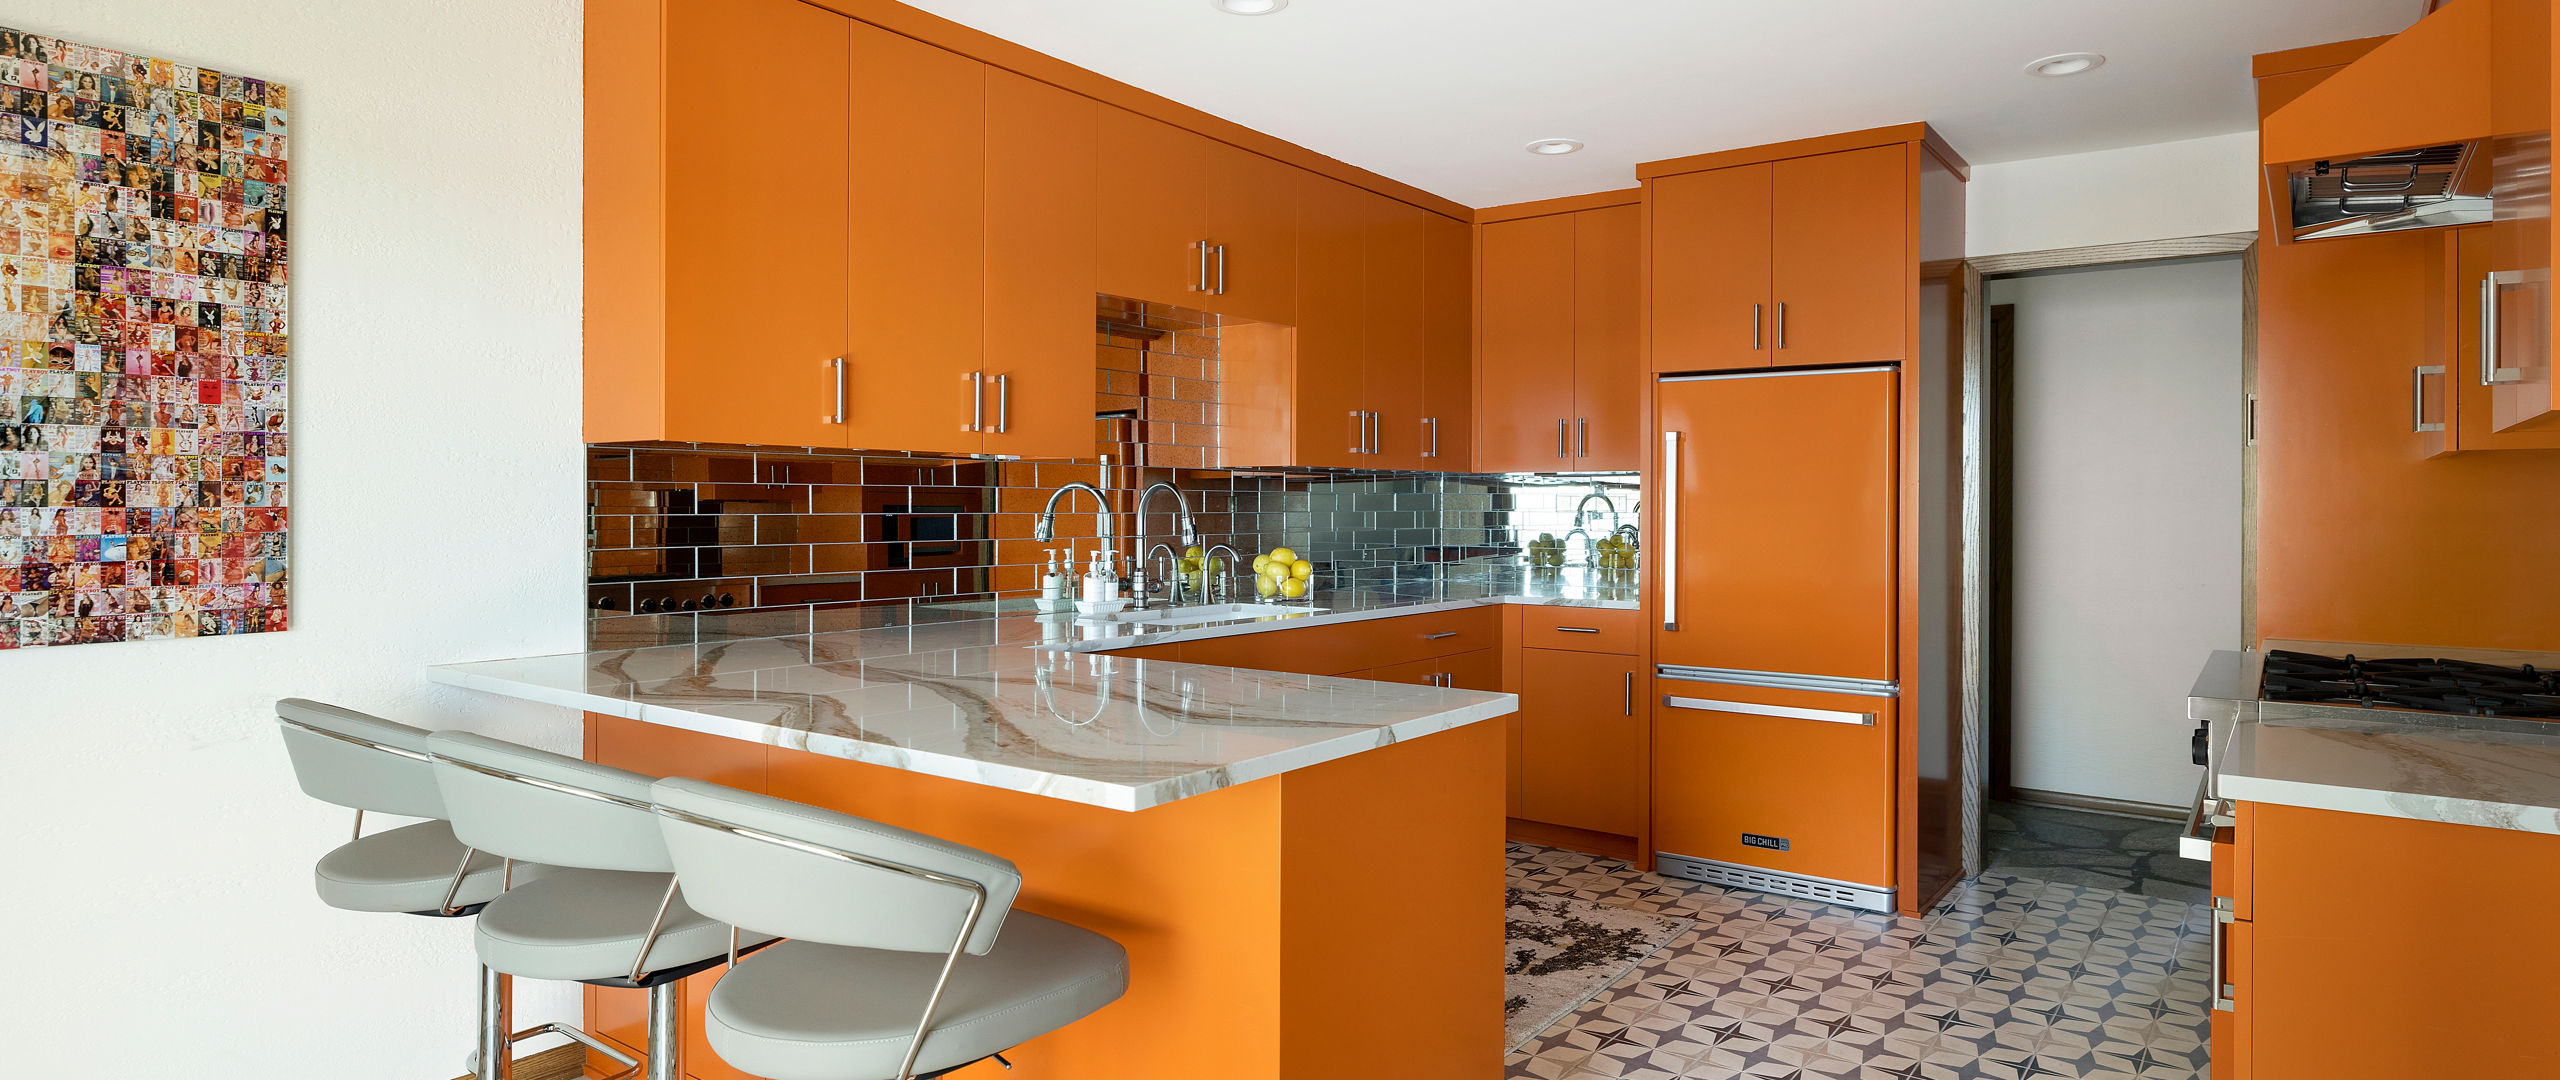 a bold orange kitchen with tiled flooring, white veined quartz countertops, a shiny black tile backsplash and three gray bar stools